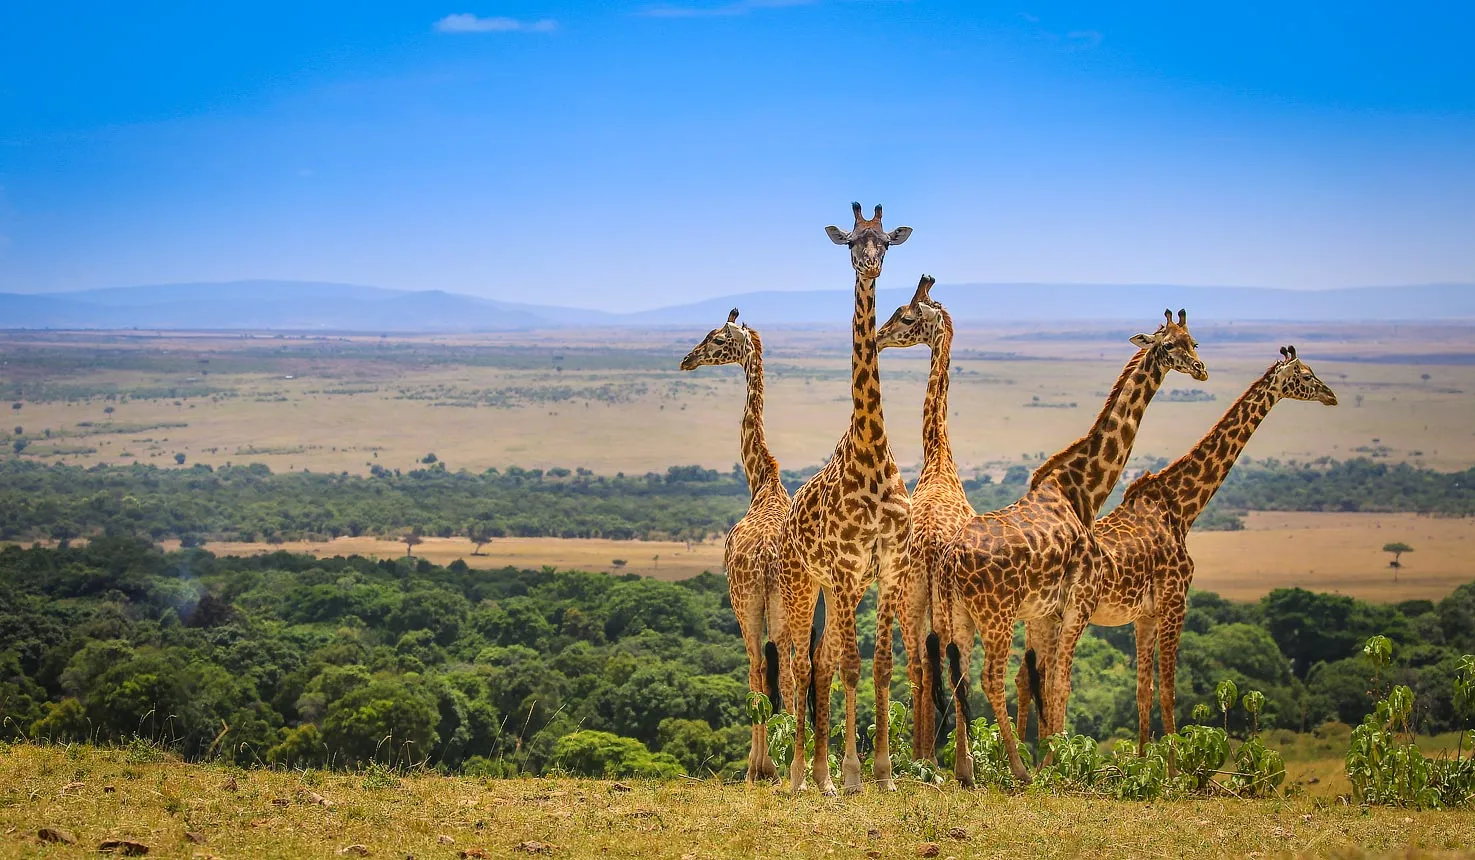 kenya tourism packages - Giraffe